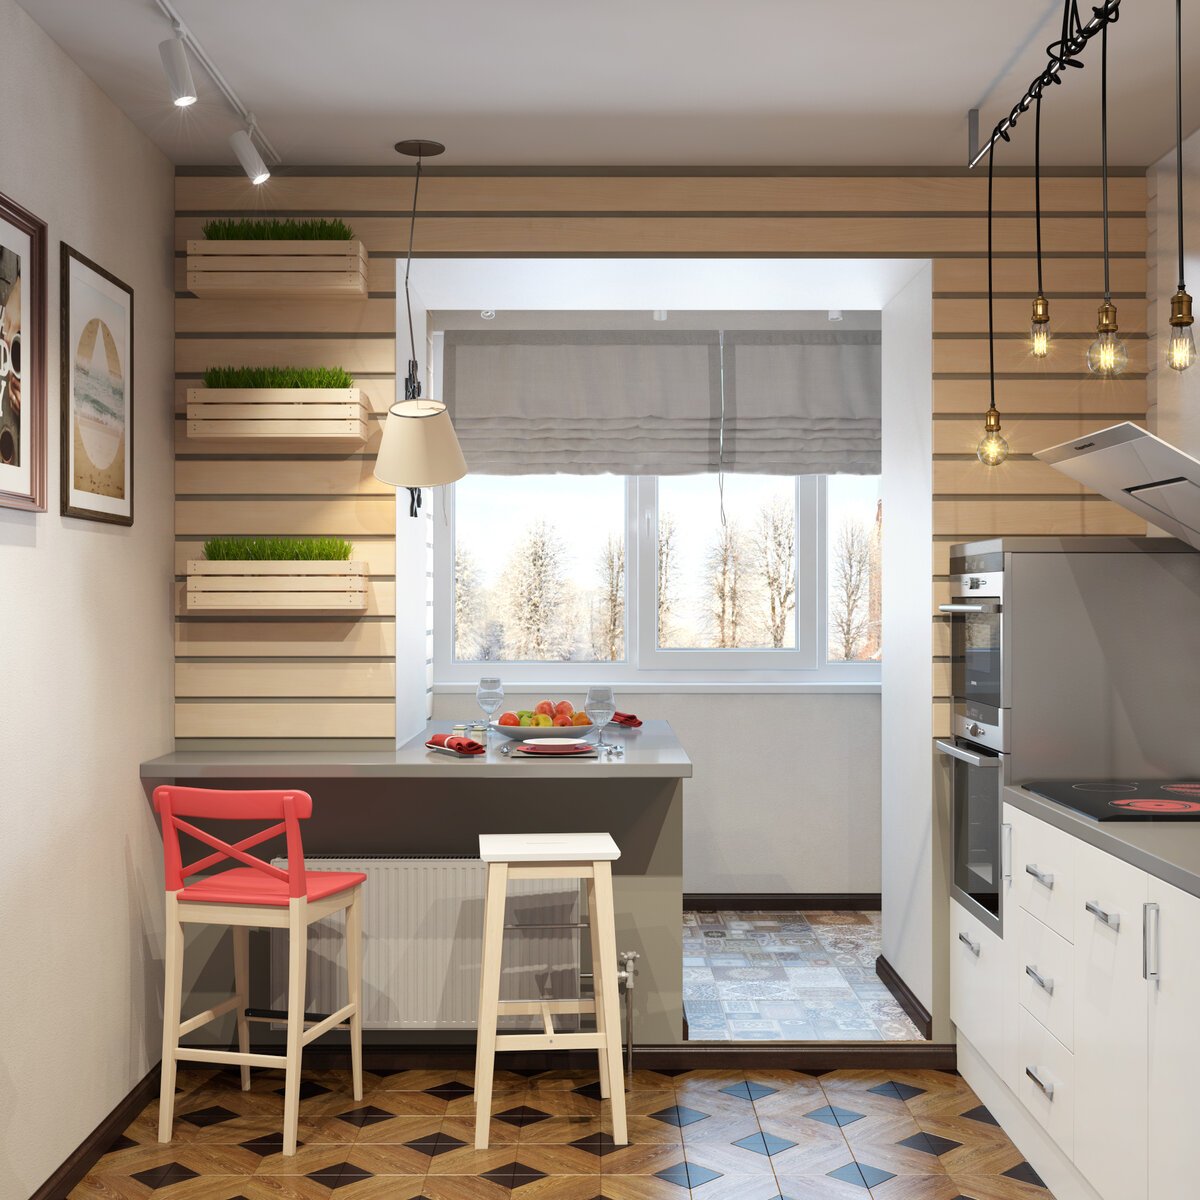 Дизайн кухни с балконом - 75 фото